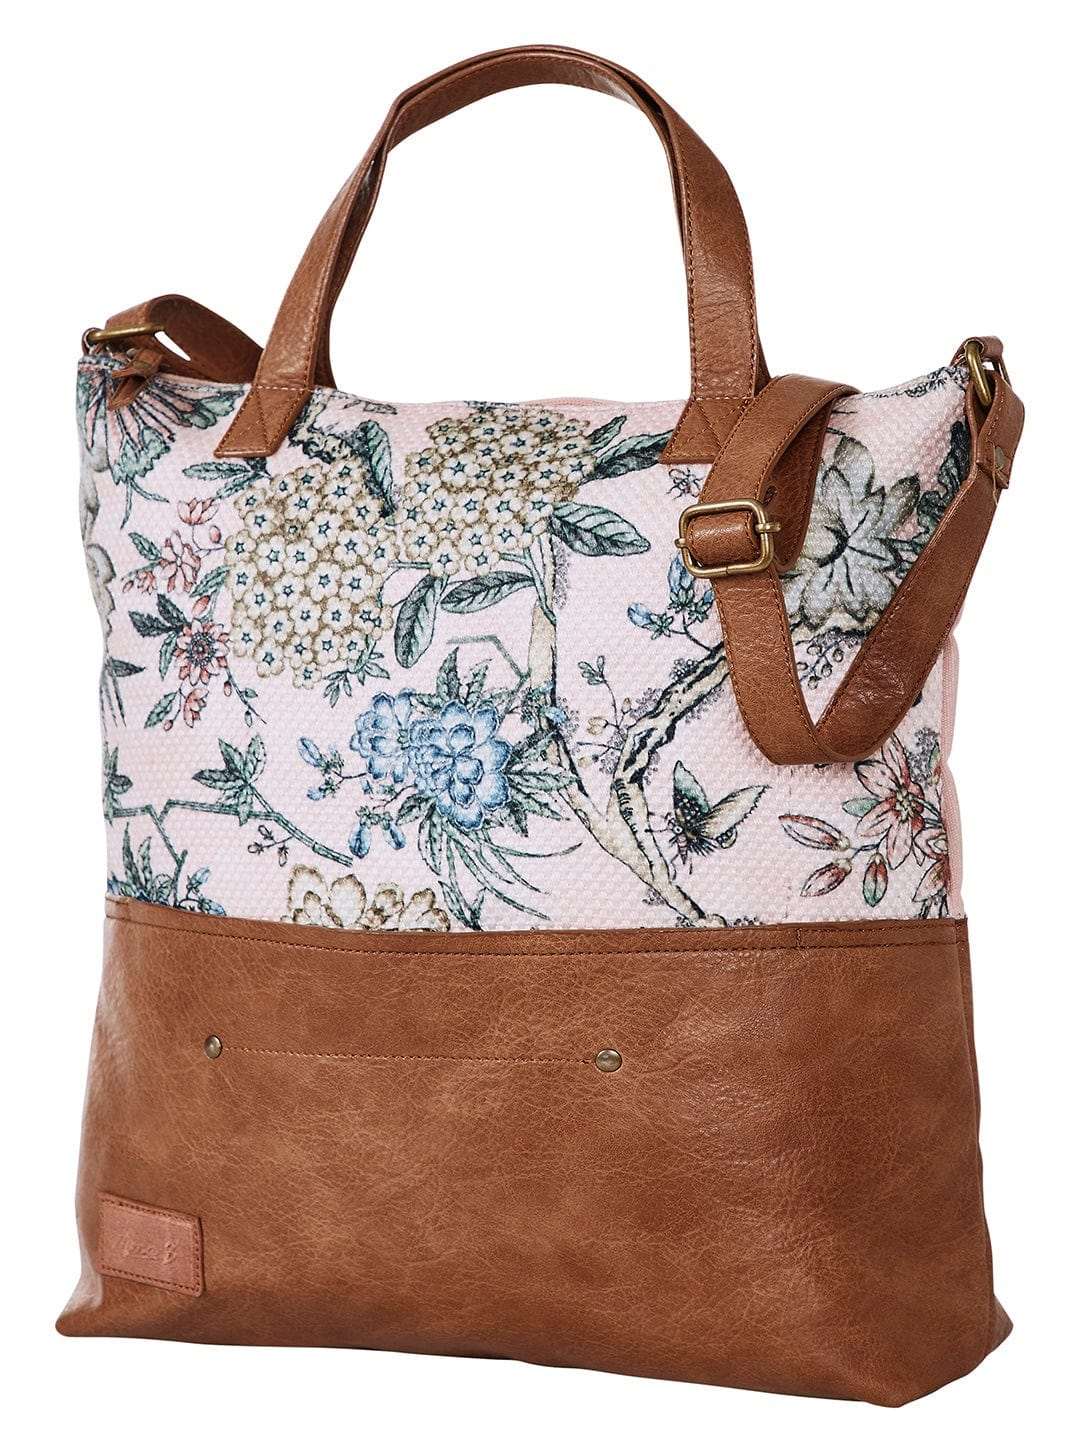 Mona-B Bag Mona B Canvas Large Vintage Handbag, Shoulder Bag, Zipper Tote Bag for Shopping, Travel with Stylish Design For Women (Pink, Kilim) - M-7000